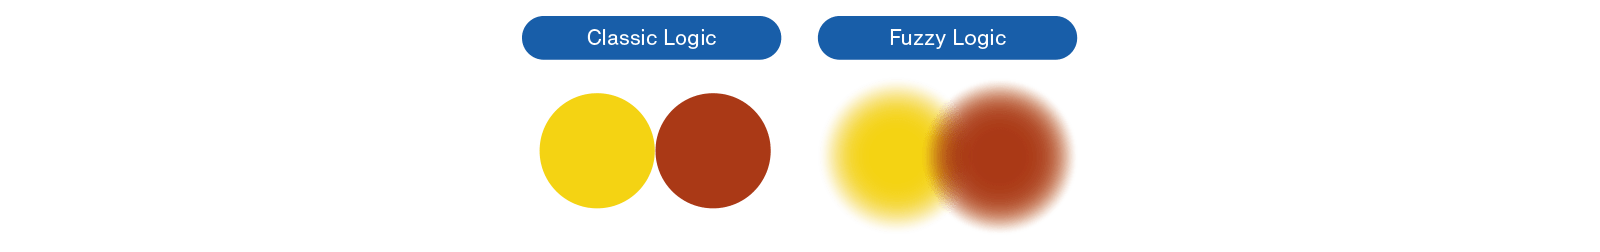 differenza tra logica classica e logica fuzzy en